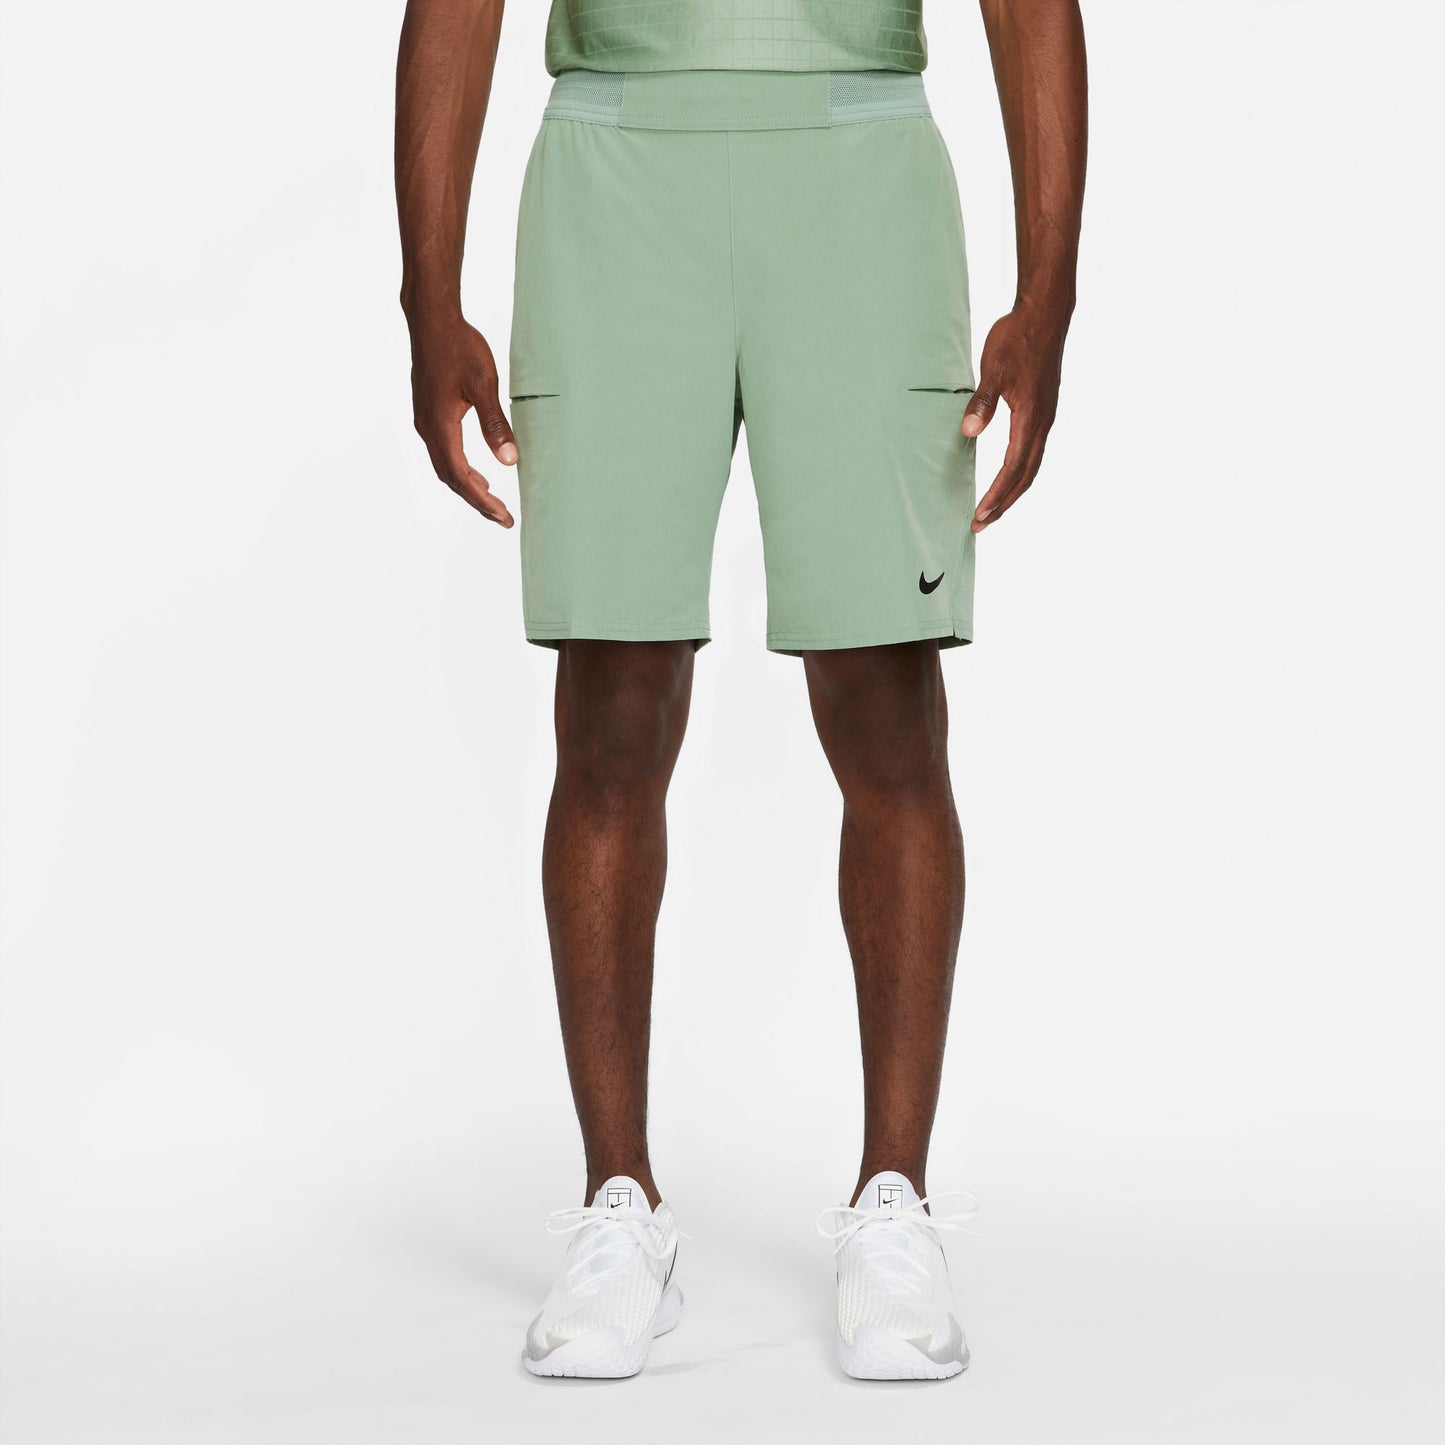 Nike Flex Advantage Men's 9-Inch Tennis Shorts Green (1)